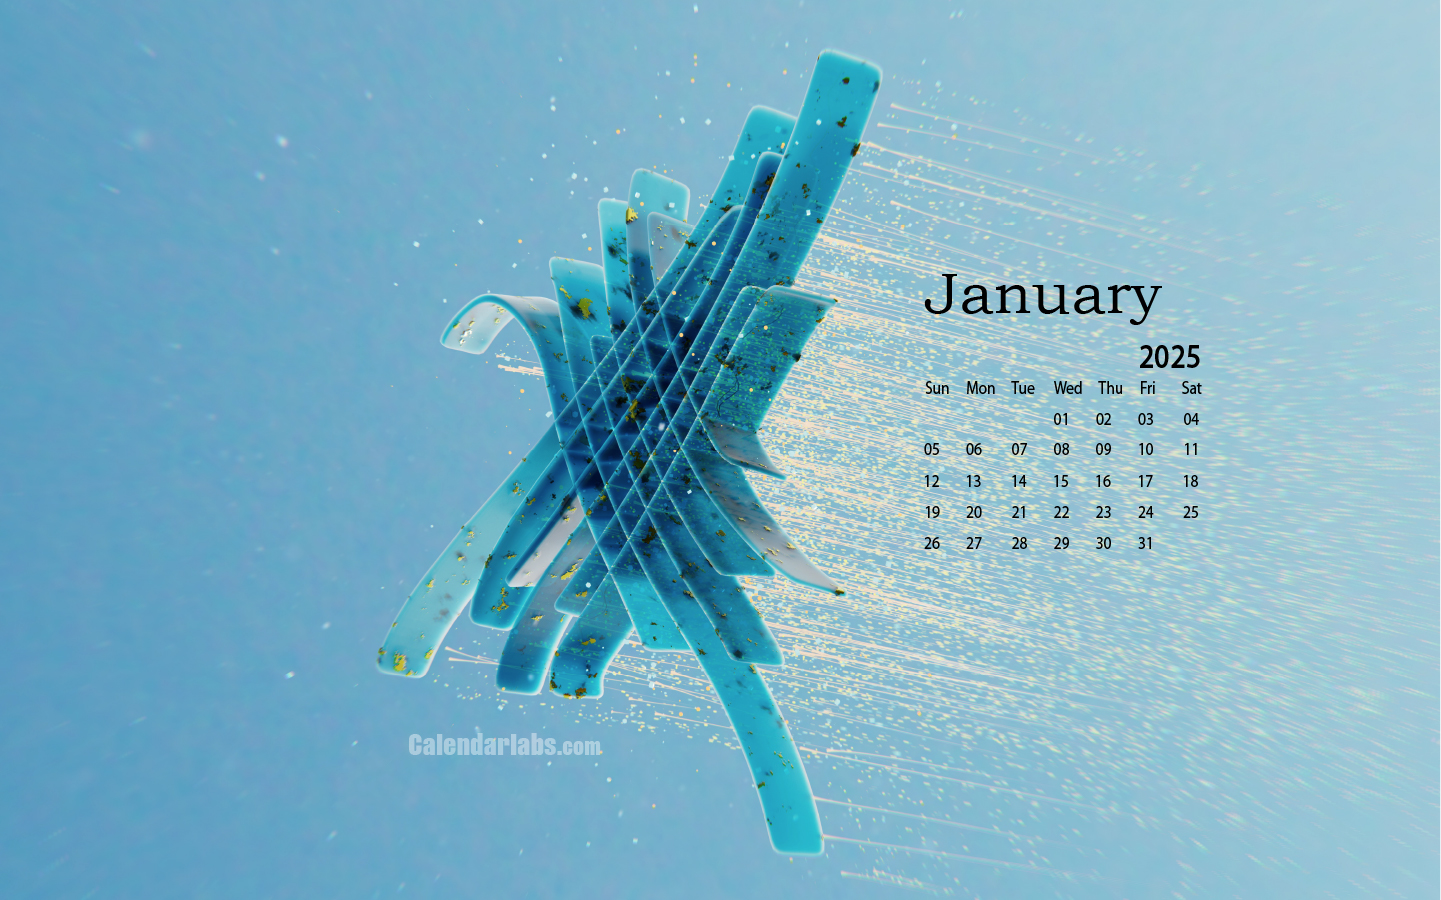 January 2025 Calendar Desktop Wallpaper seka valeria